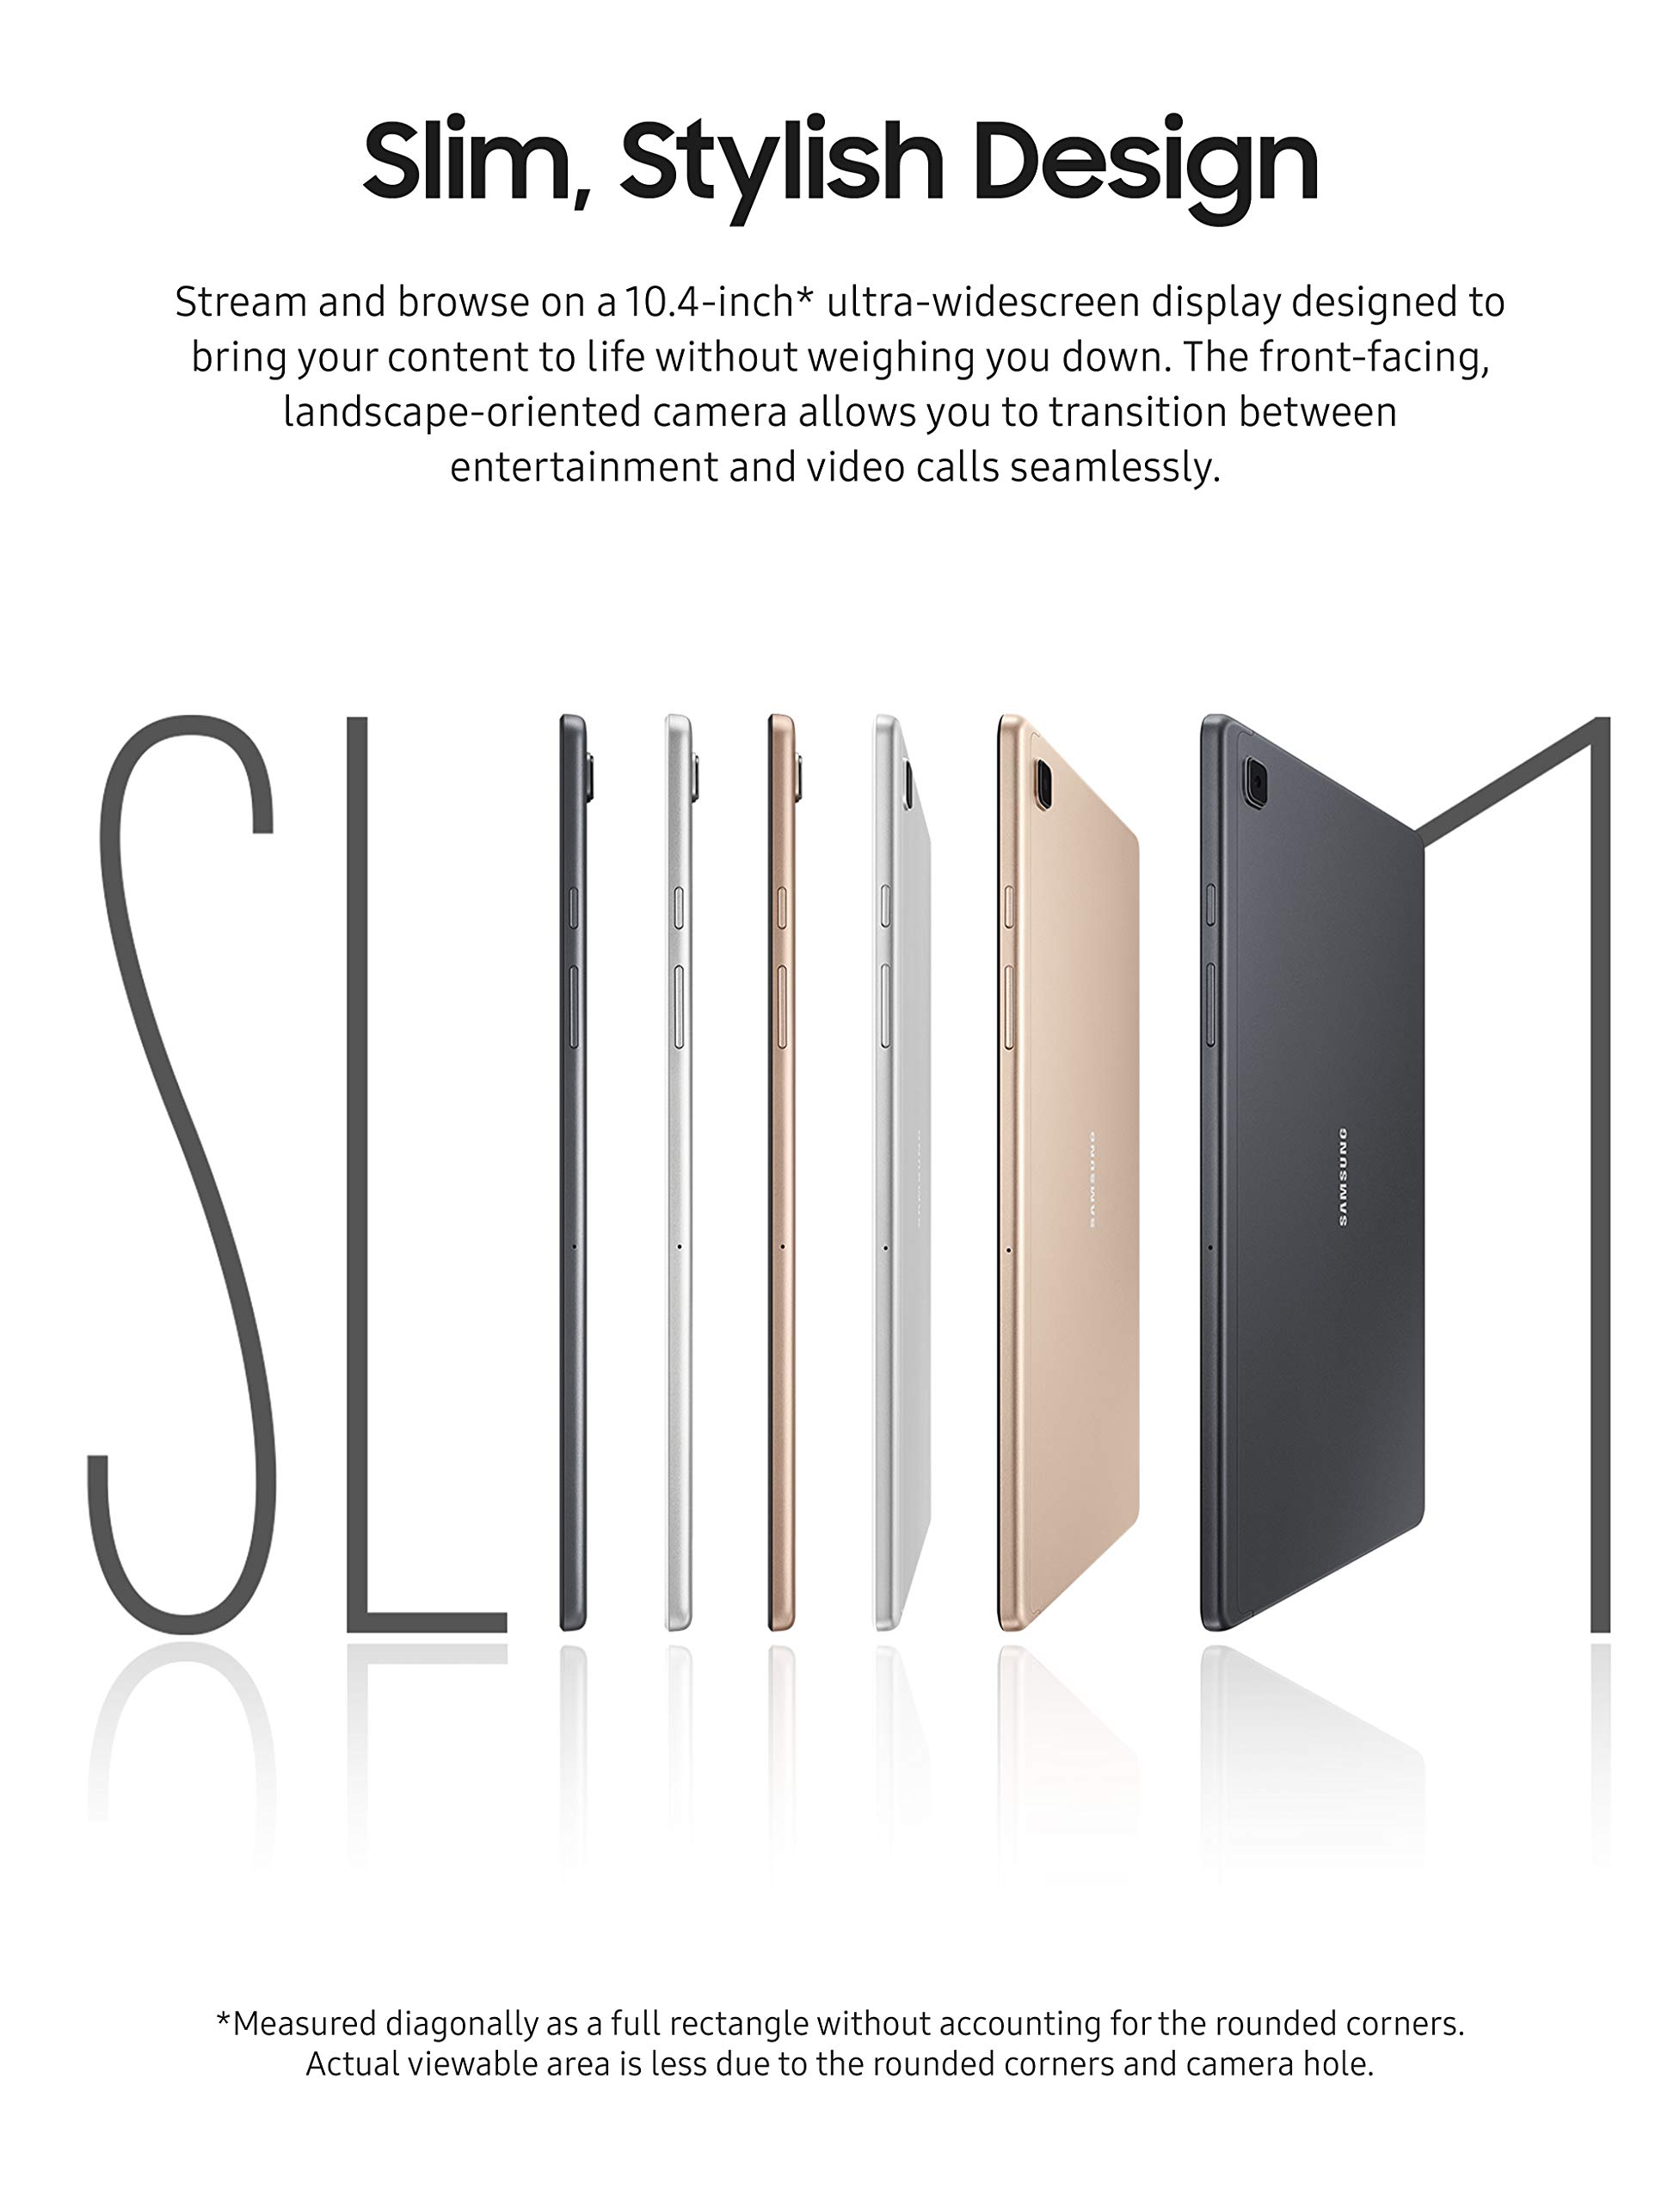 SAMSUNG Galaxy Tab A7 10.4 Wi-Fi 32GB Gold (SM-T500NZDAXAR)